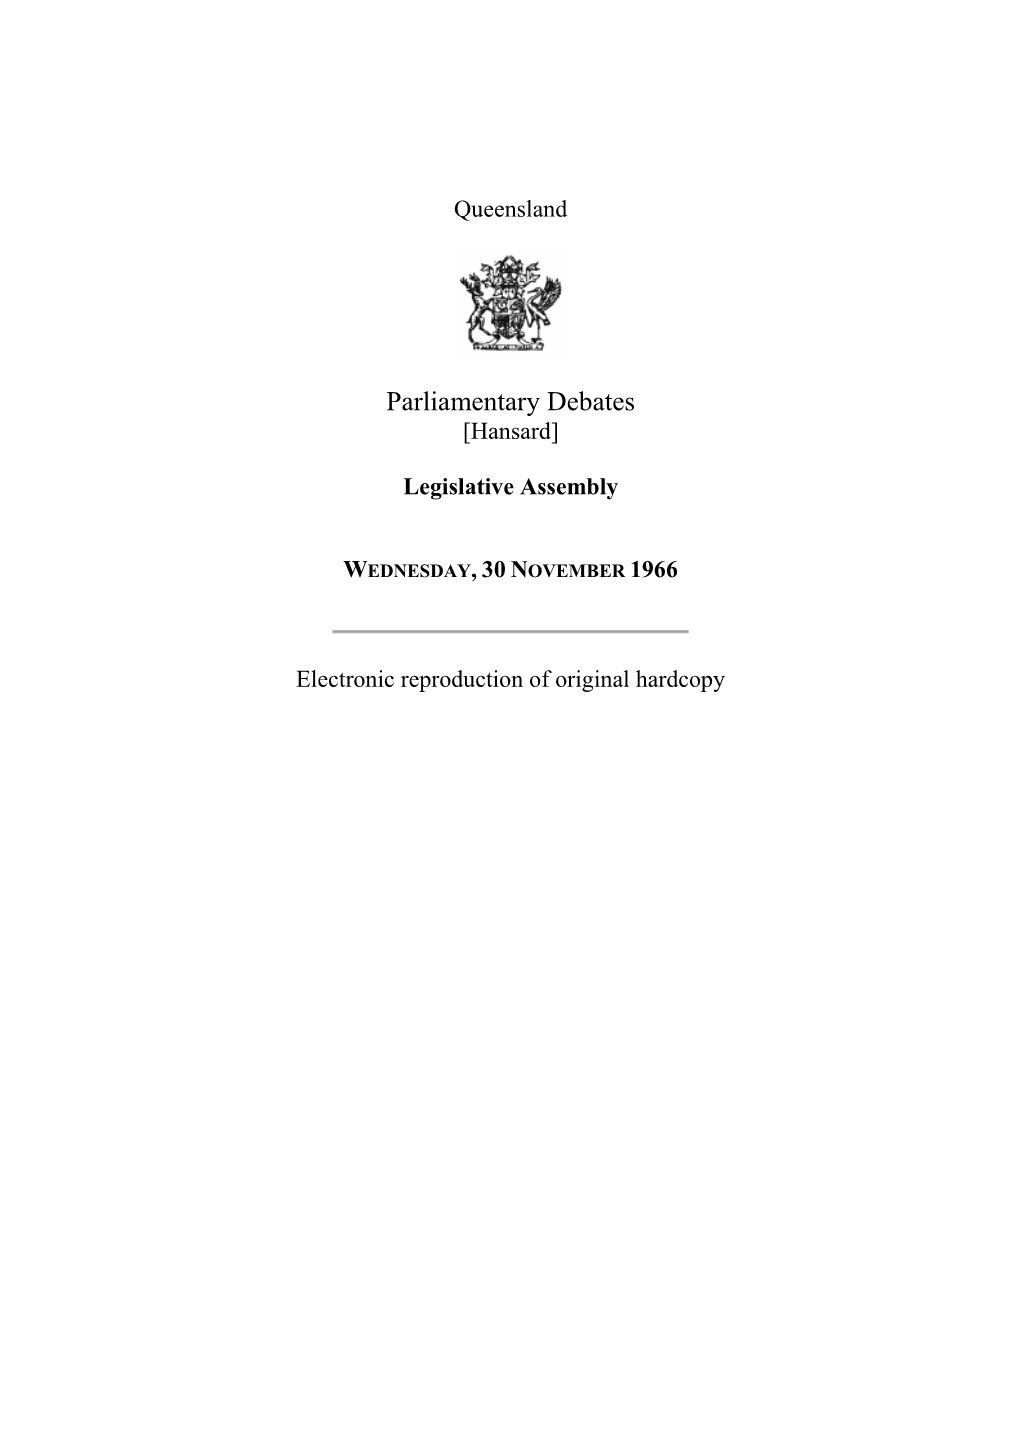 [Hansard] Legislative Assembly WEDNESDAY, 30 NOVEMBER 1966 Electronic Reproduction of Original Hardcopy